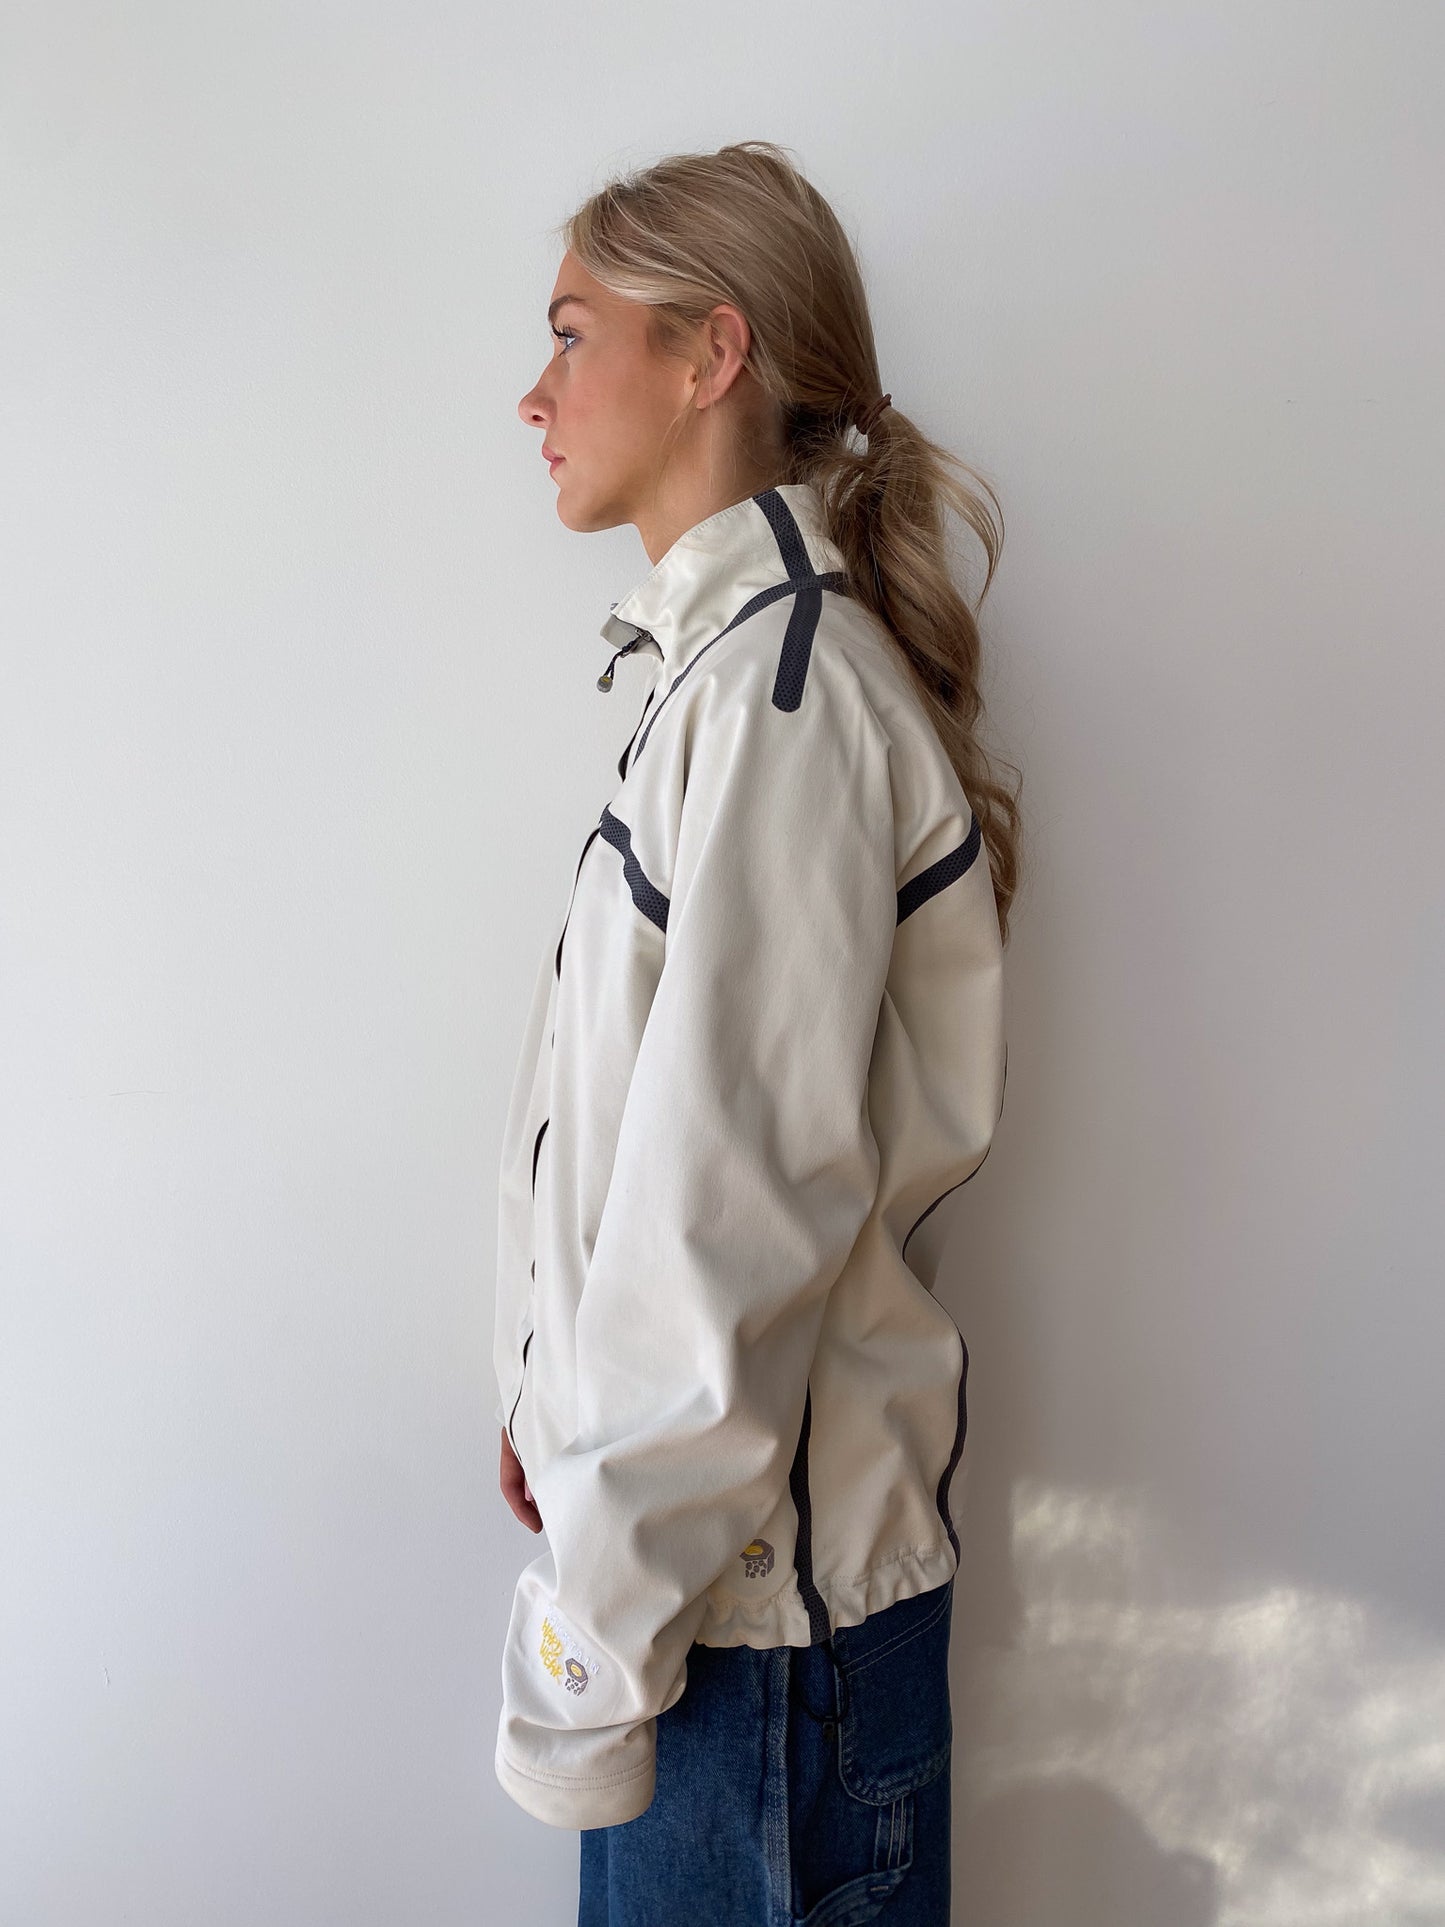 Mountain Hard Wear Conduit Softshell Jacket—[M]